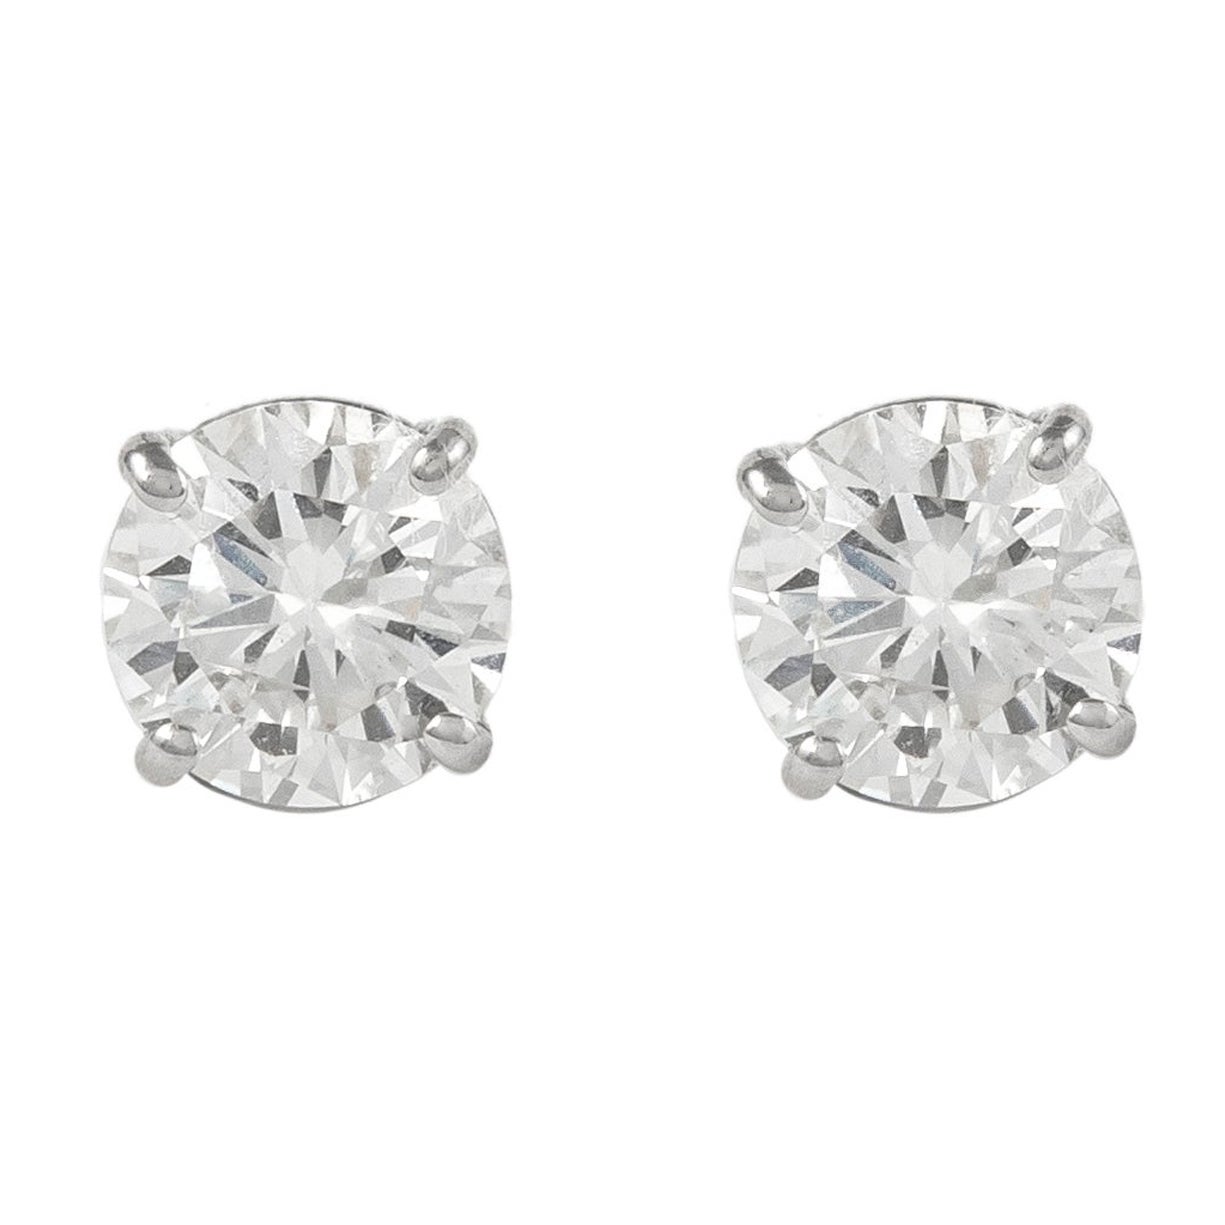 Alexander EGL Certified 2.21 Carat Diamond Stud Earrings White Gold For Sale